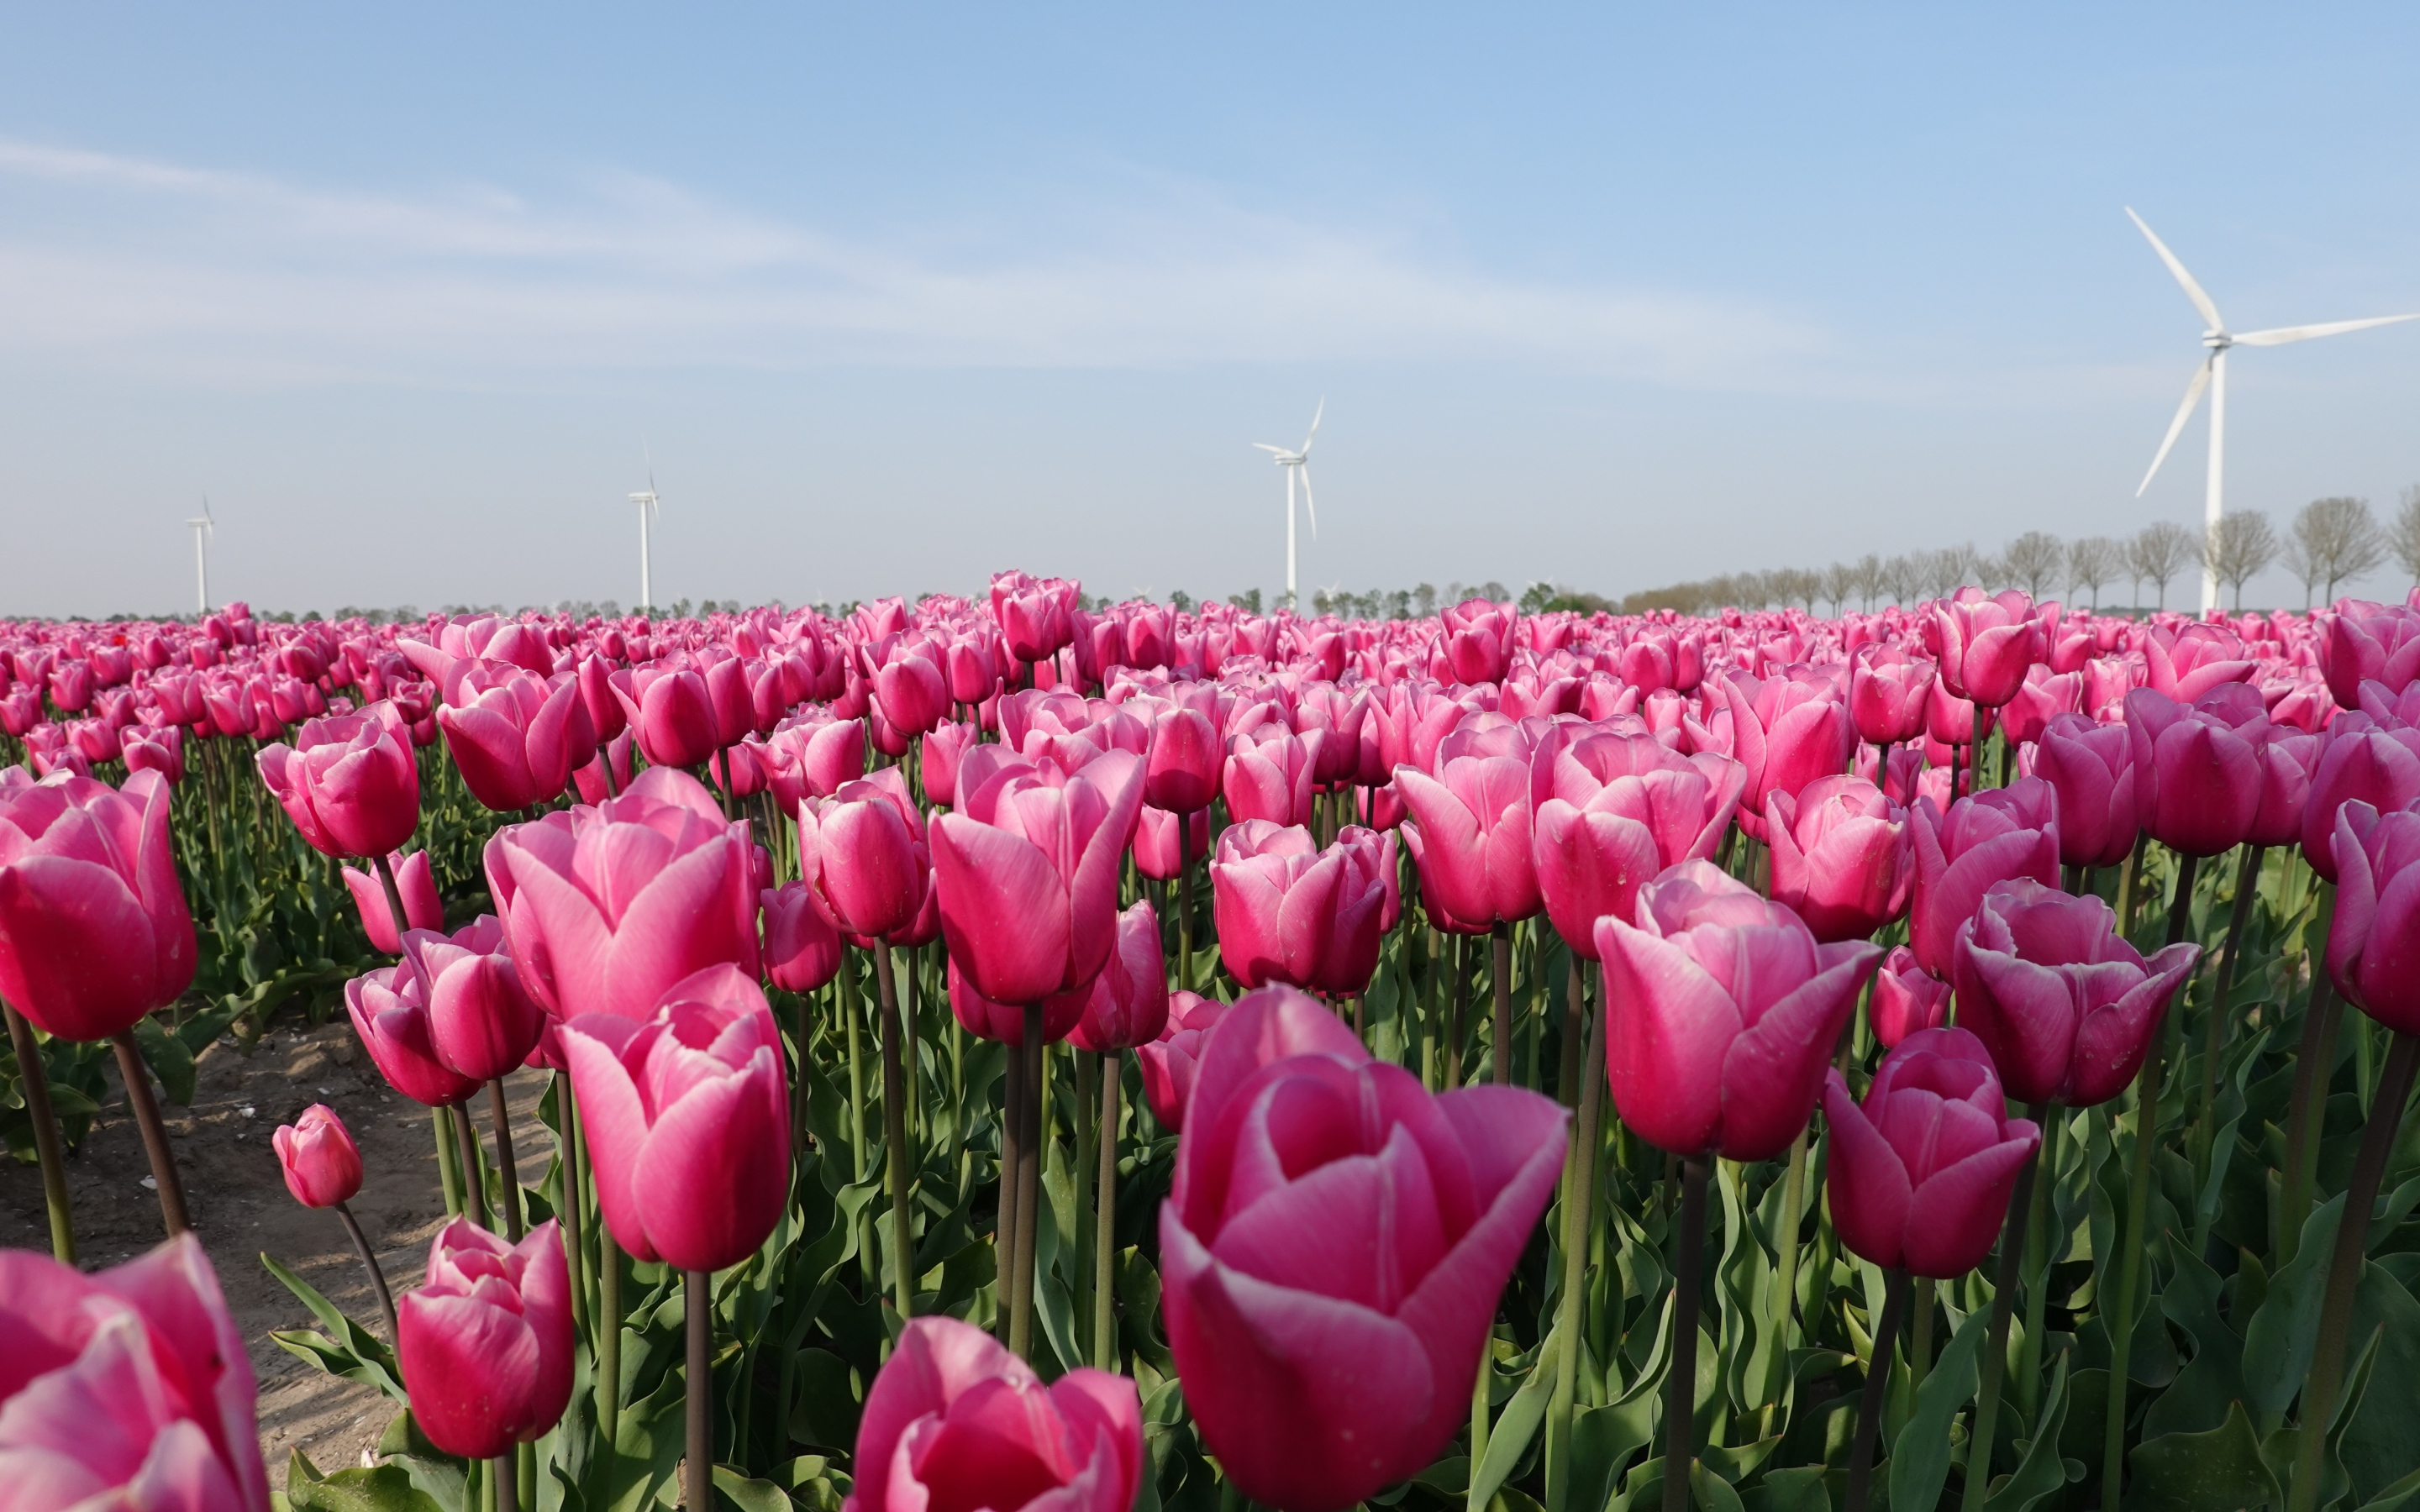 Farm, flowers, pink tulips, 2880x1800 wallpaper